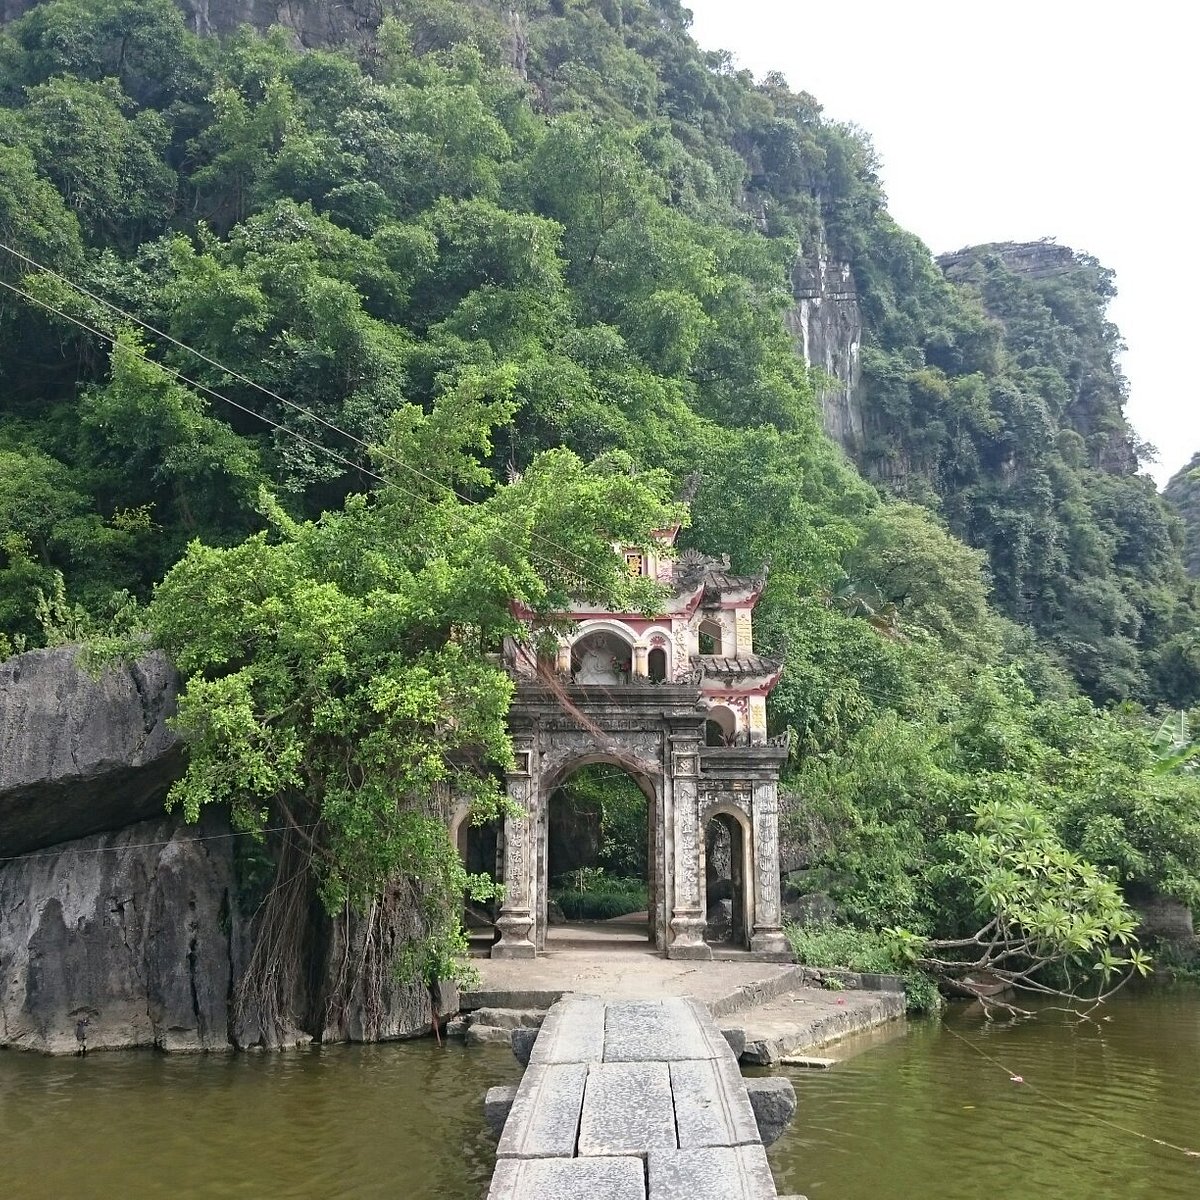 Bich Dong Pagoda in Ninh Binh, Vietnam: The ULTIMATE Guide!